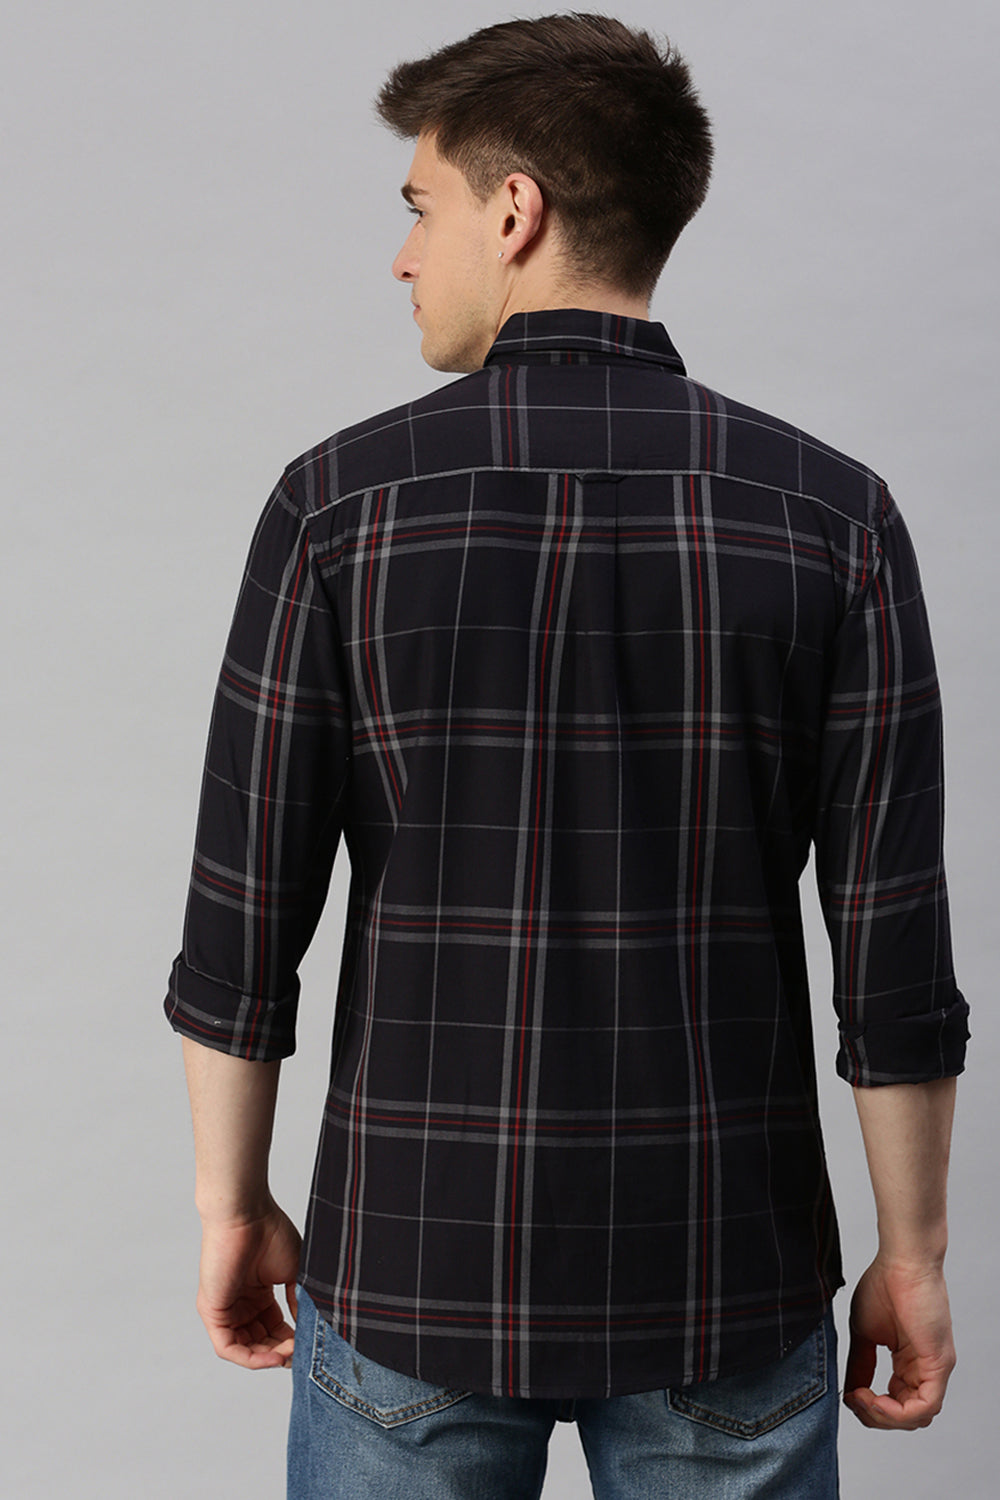 CP BRO Men's Cotton Full Sleeve Checked Slim Fit Collar Neck Black Color Woven Shirt | Sbo1-46 B